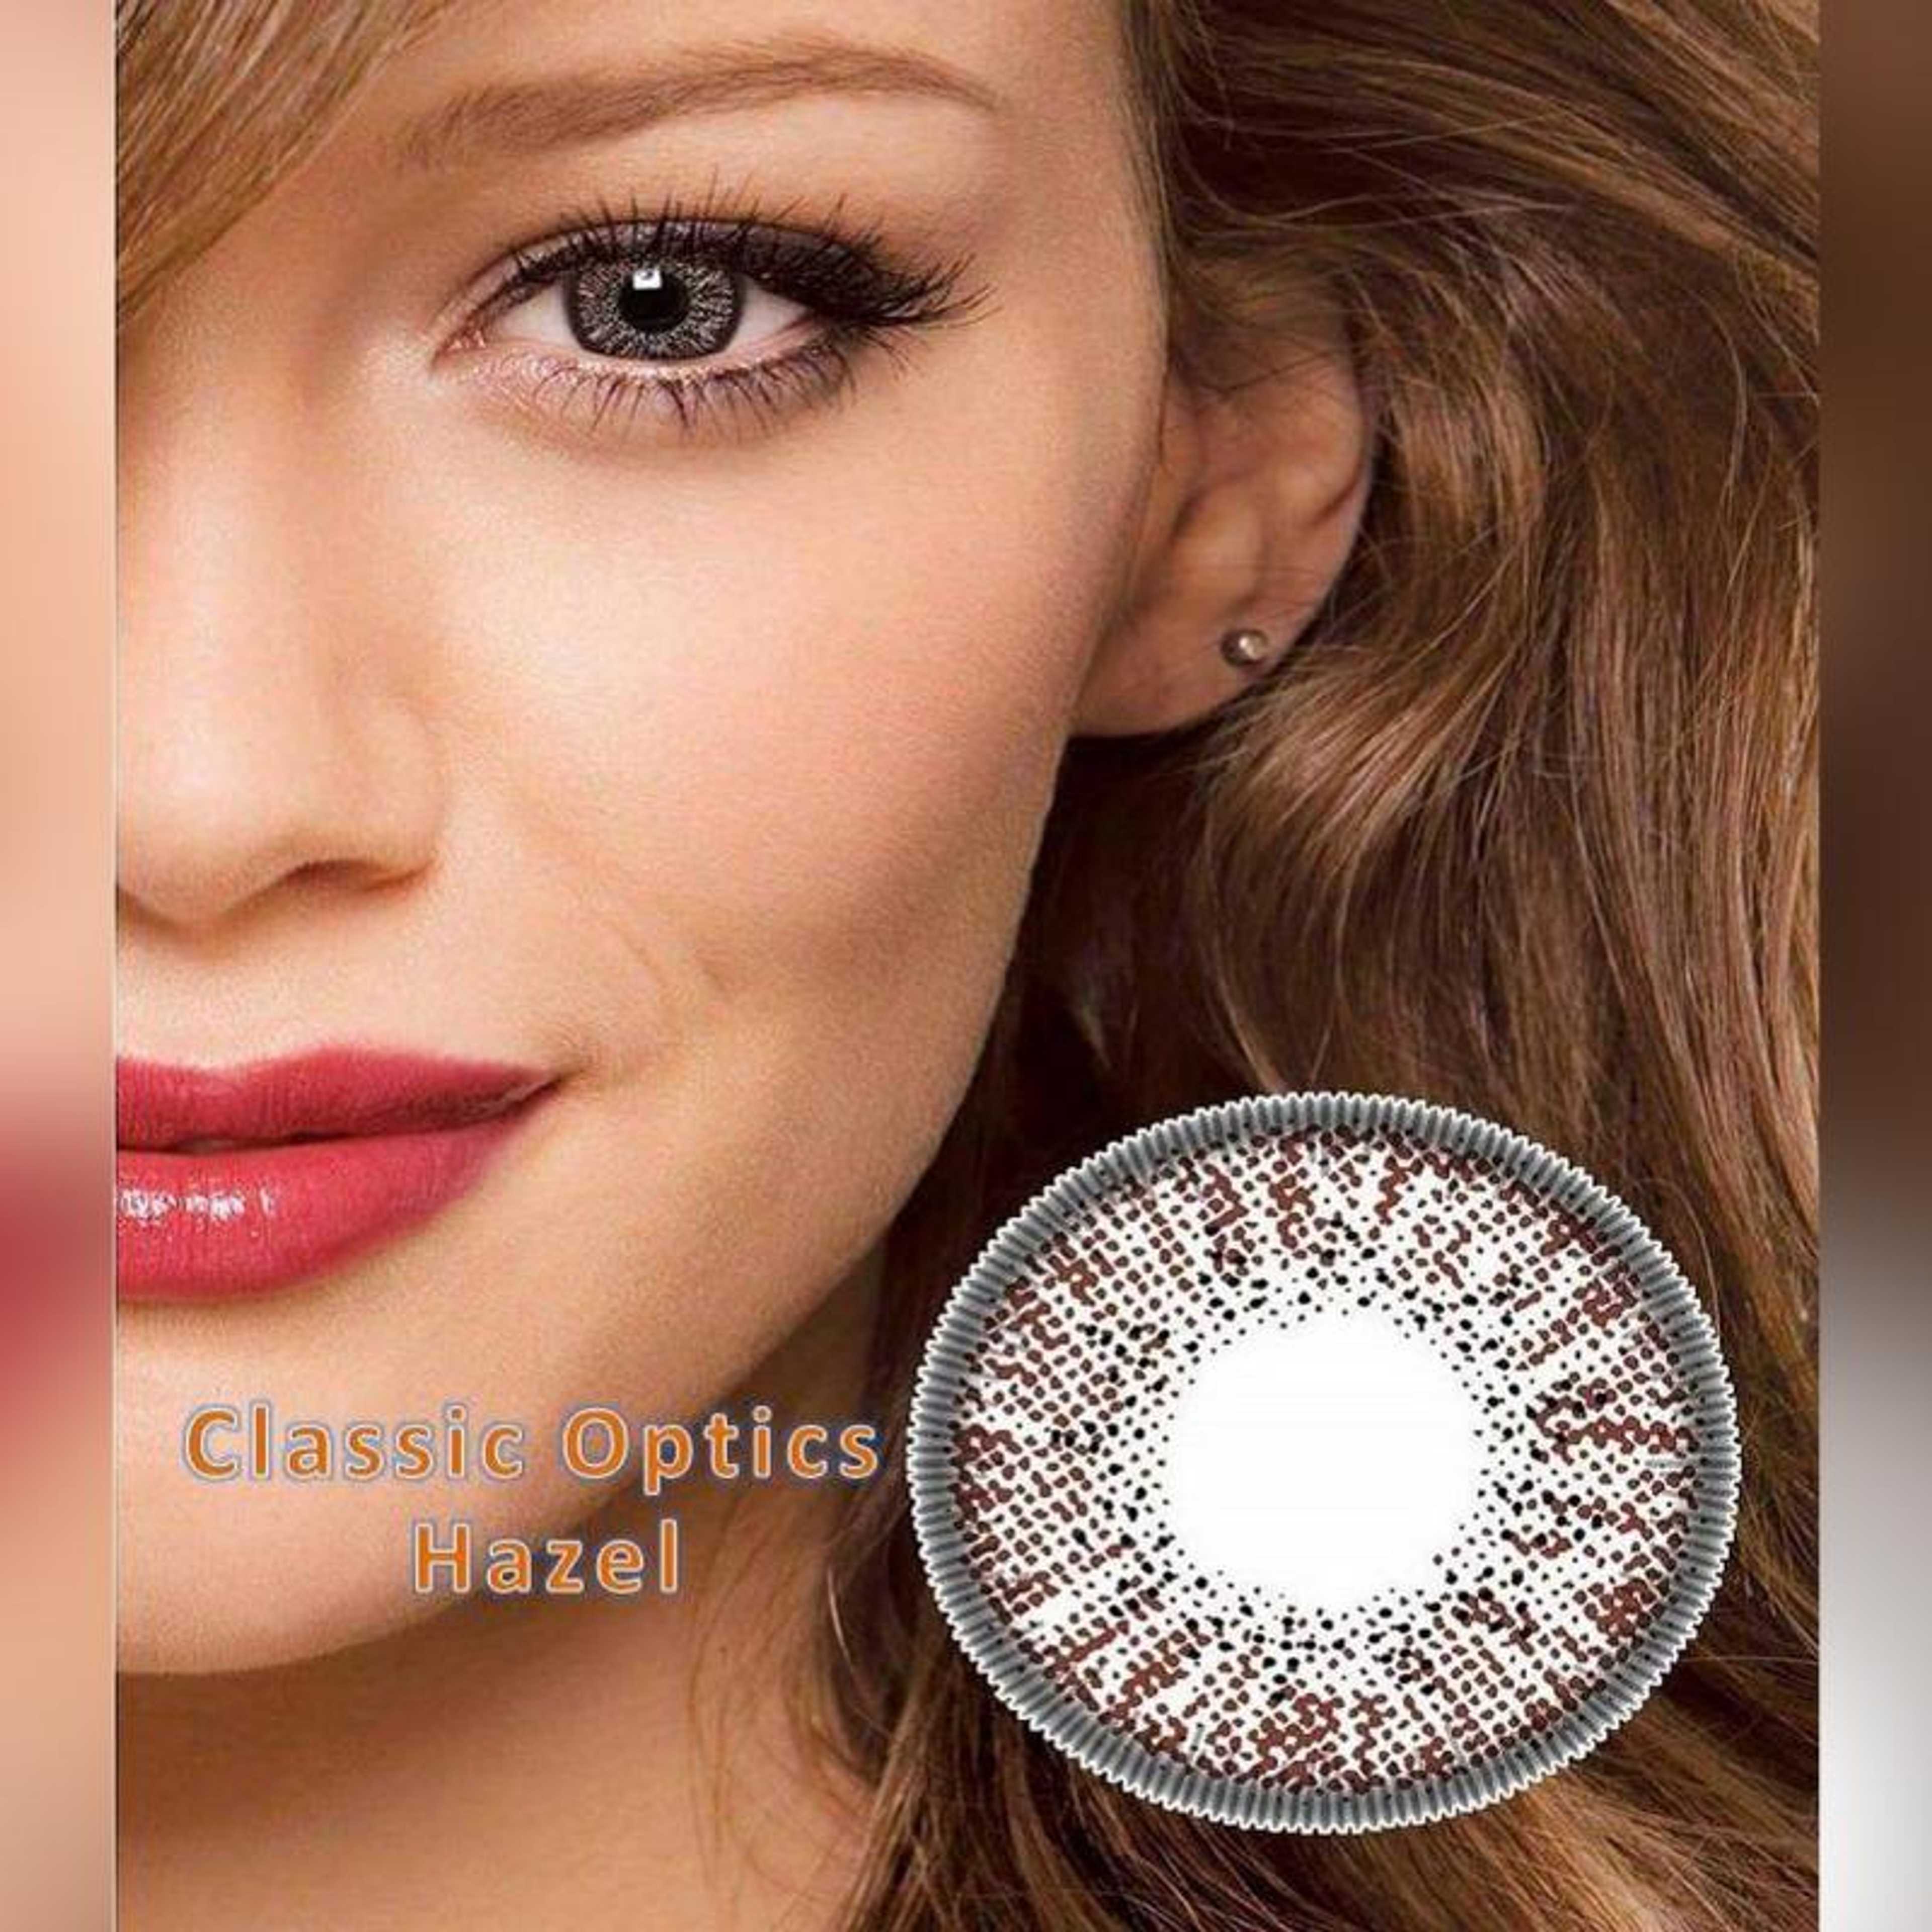 Hazel Double shade Contact Lenses-Bridal Colors